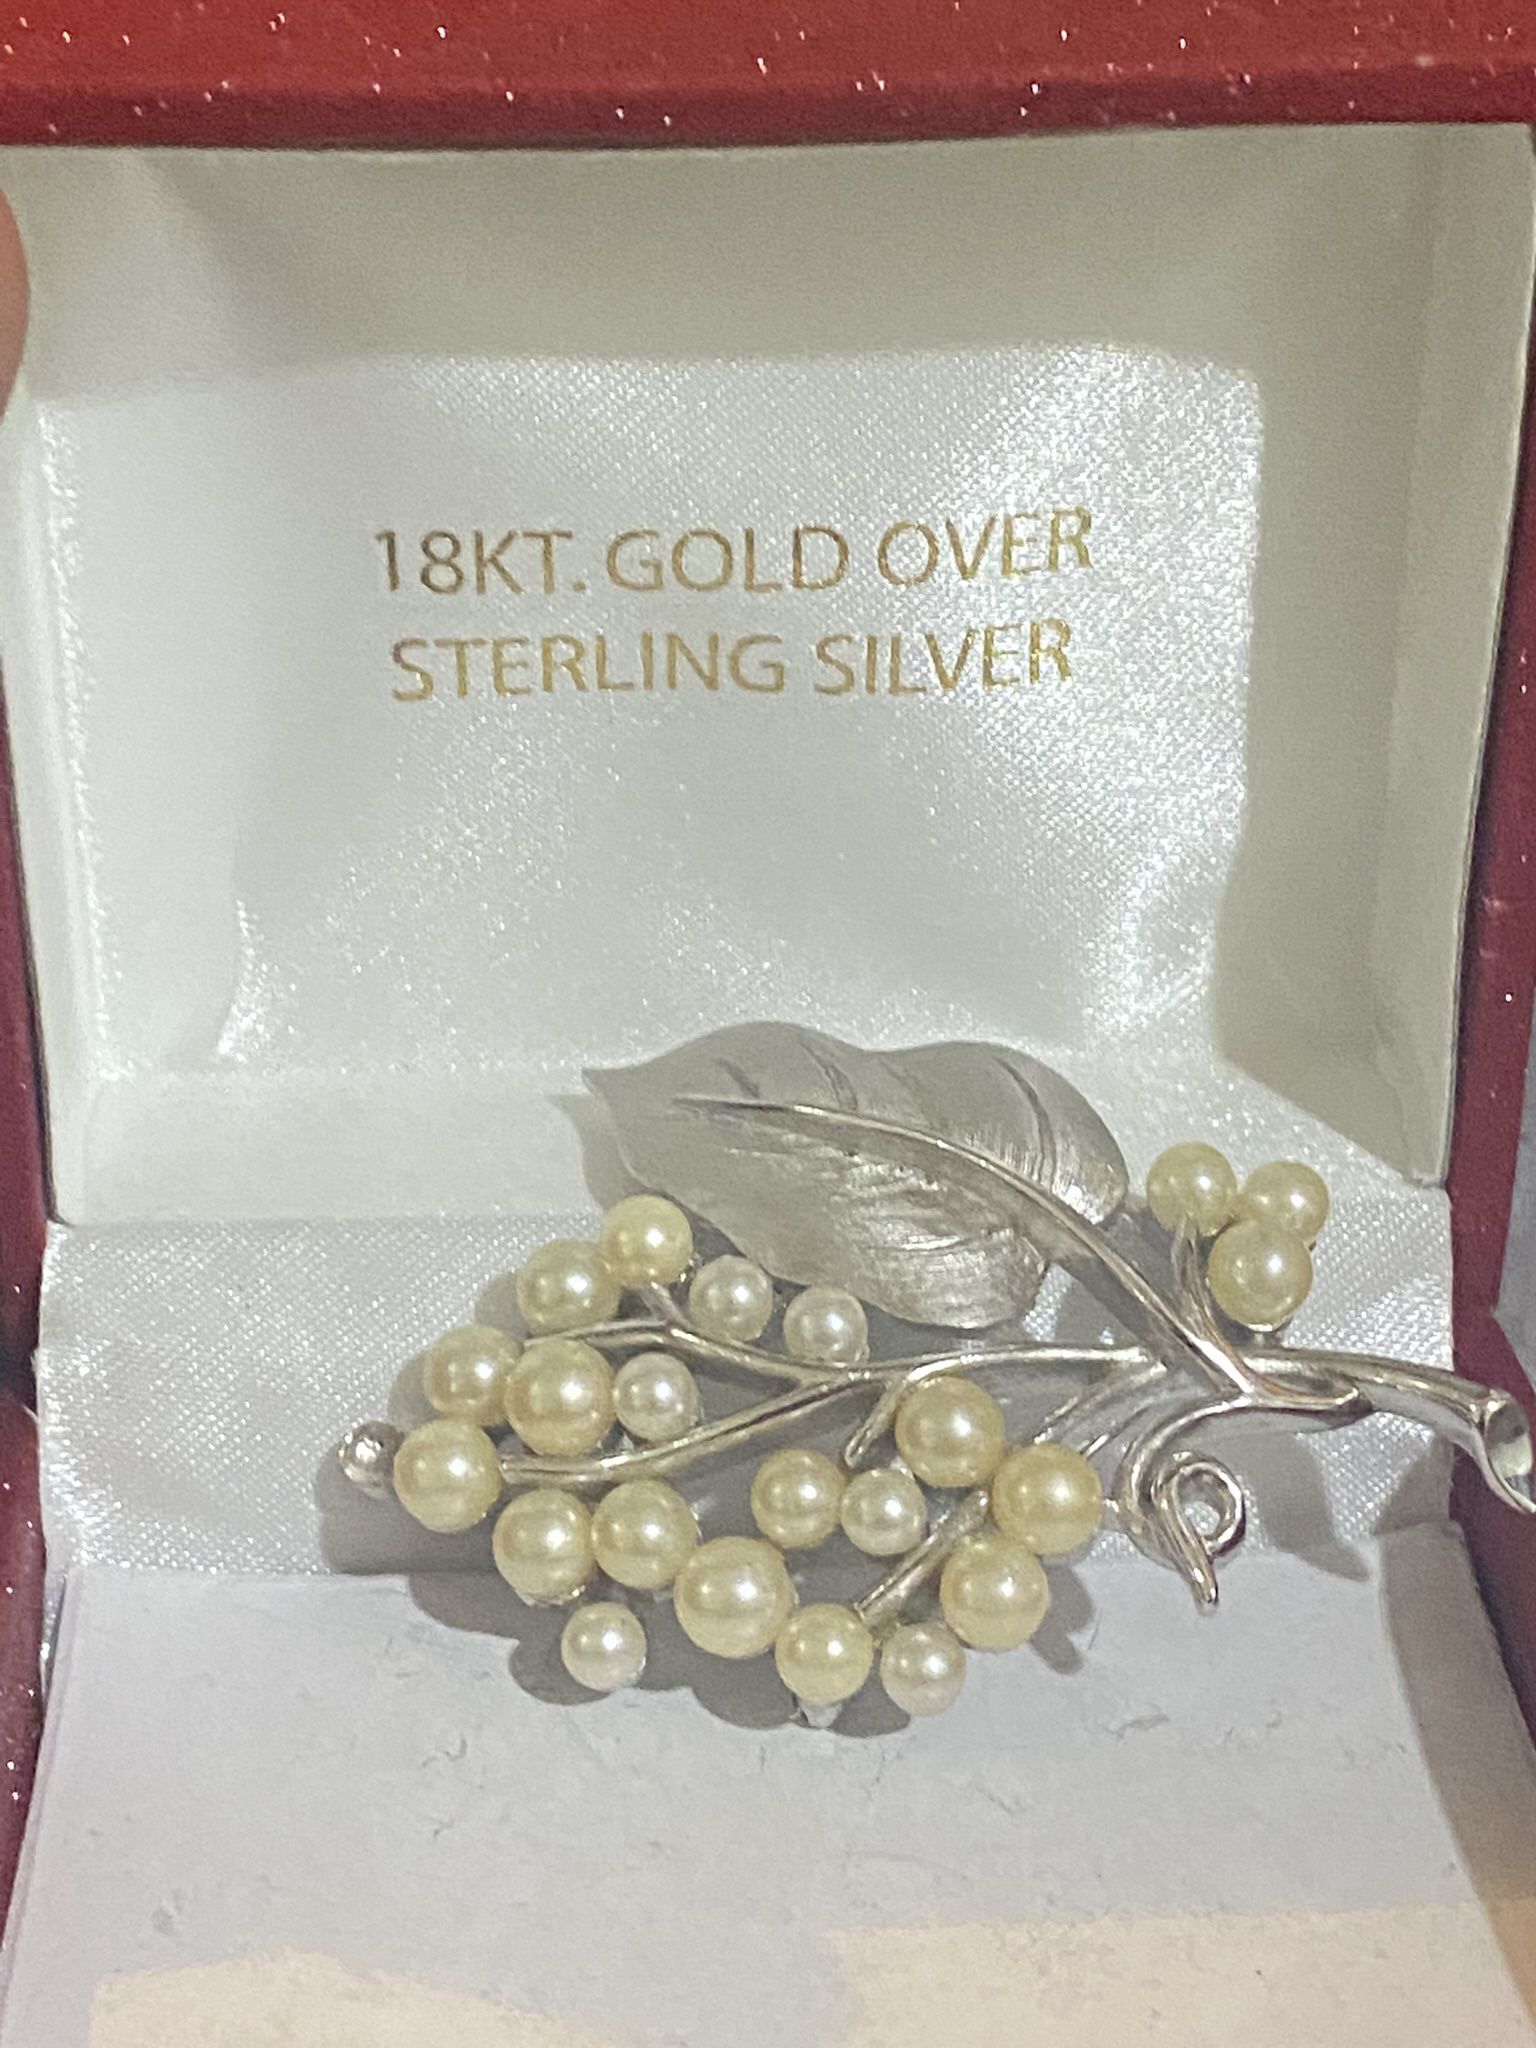 18k Gold Over Sterling Silver Brooch